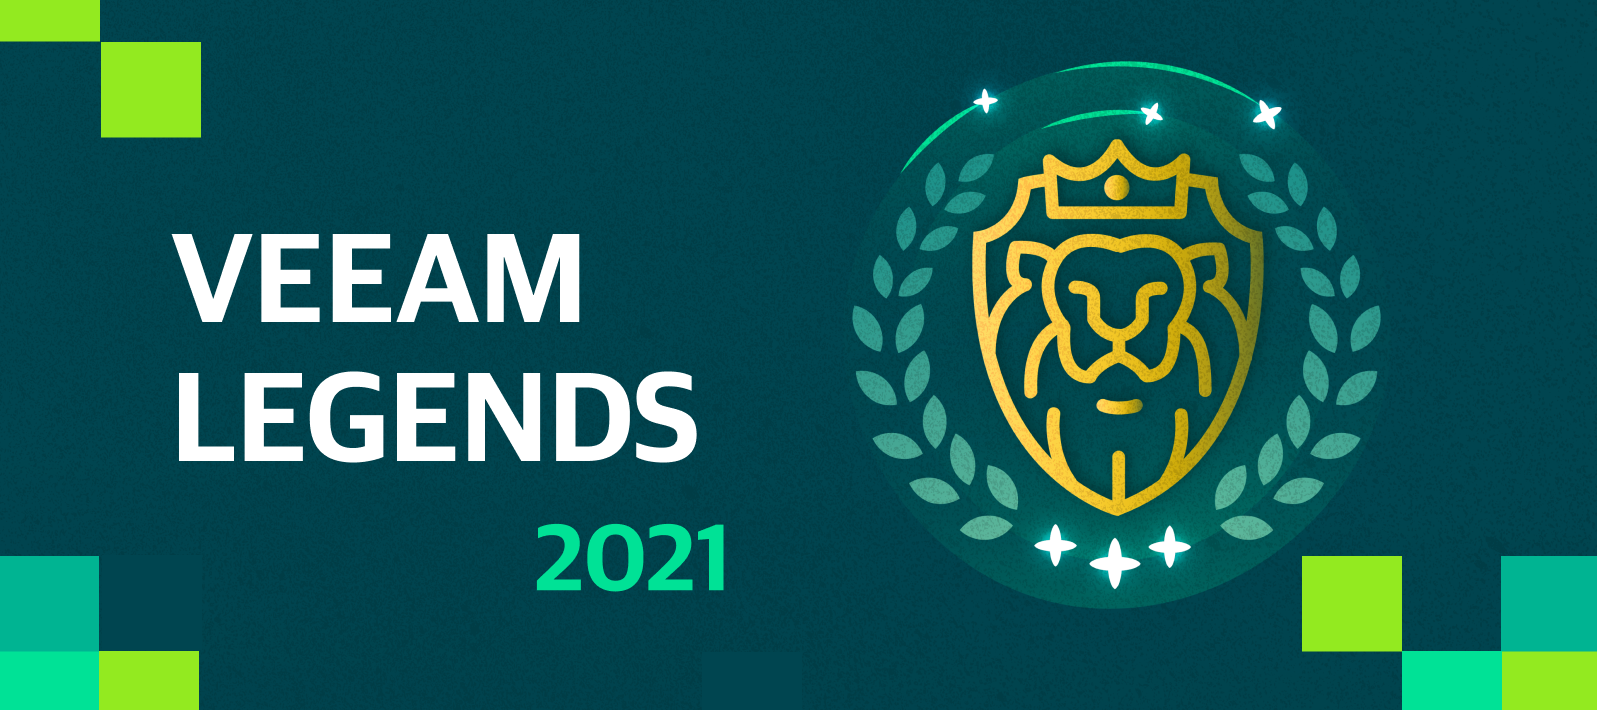 Second intake of Veeam Legends 2021 is here!